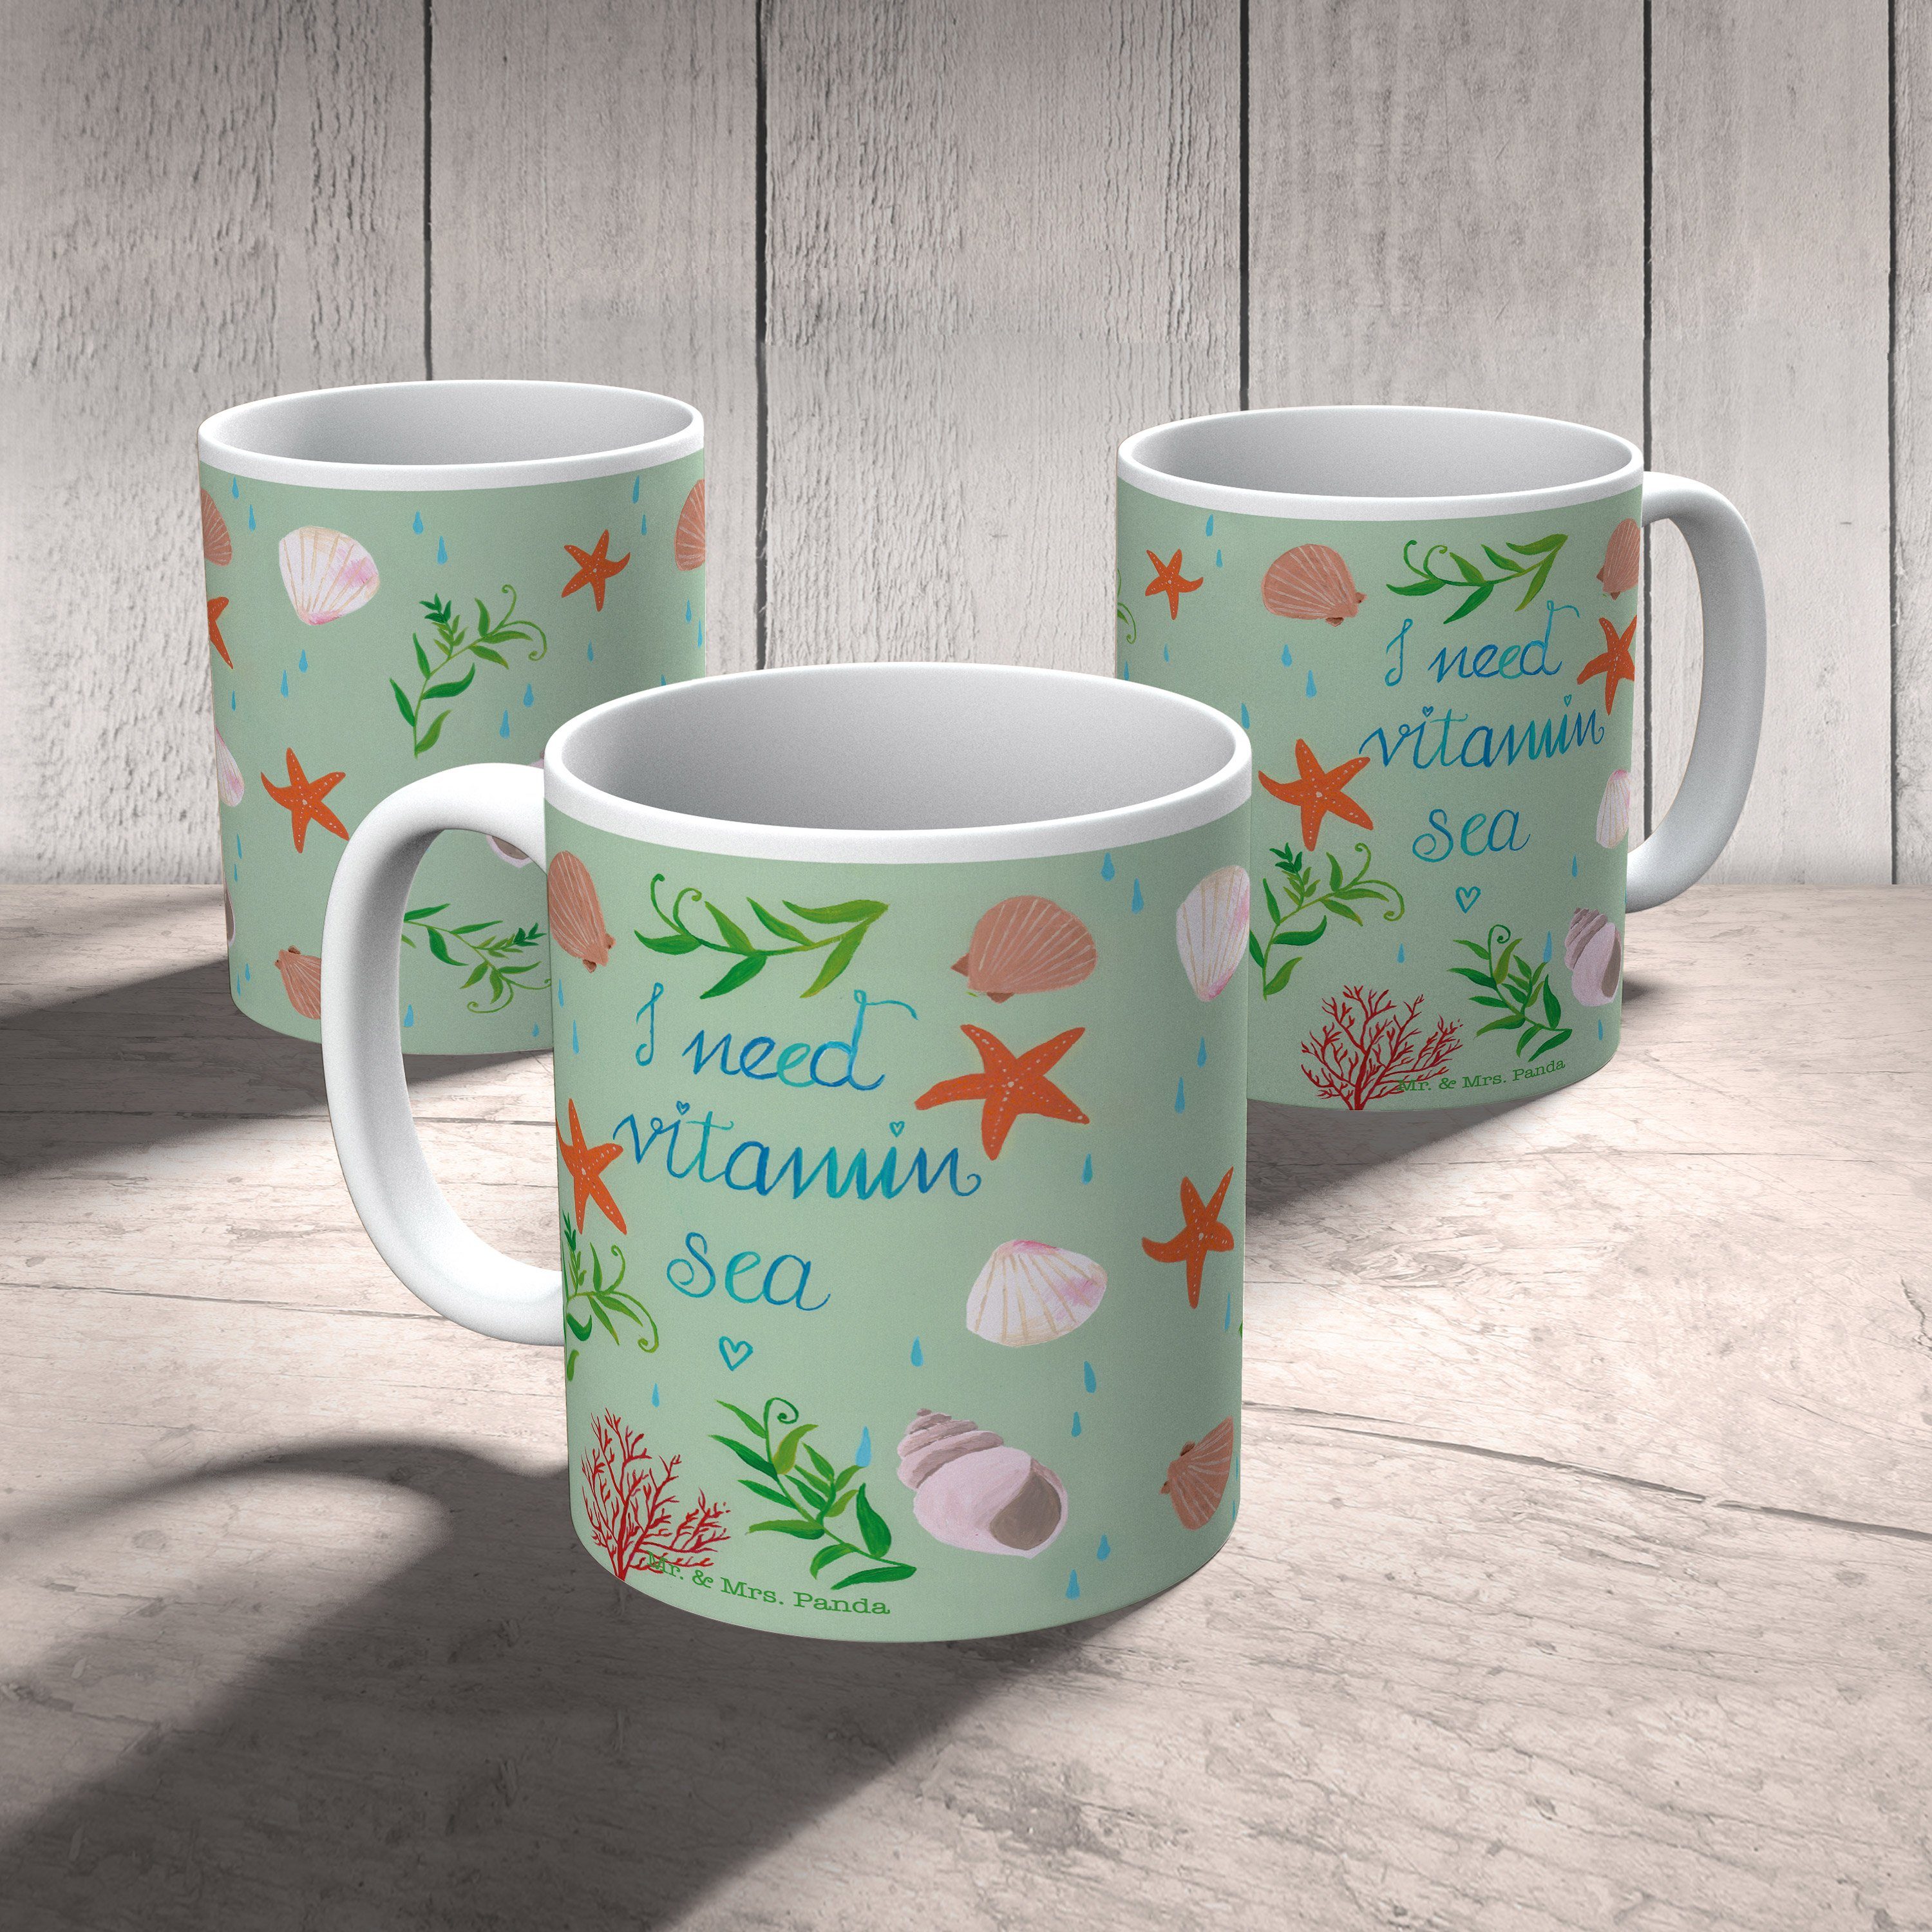 Mr. & Mrs. Panda Tasse Dekoration, Vitamin Wasserratte posi, Geschenk, Geschenk, Tasse, Sea Keramik 